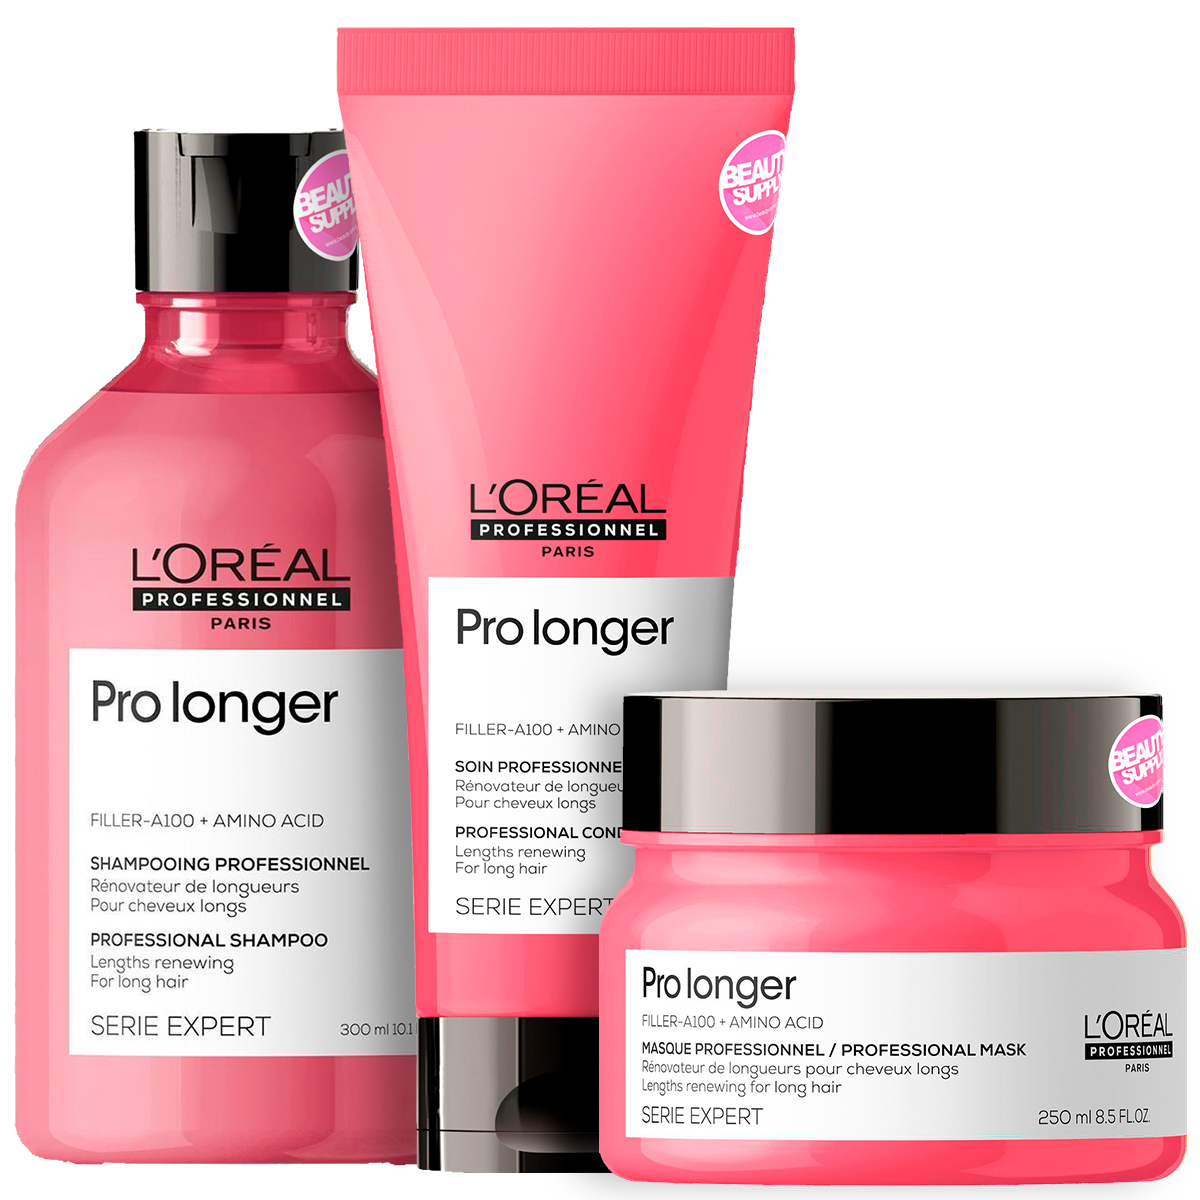 Pack Shampoo, Acondicionador Y Mascara Loreal Pro Longer en Beauty Supply